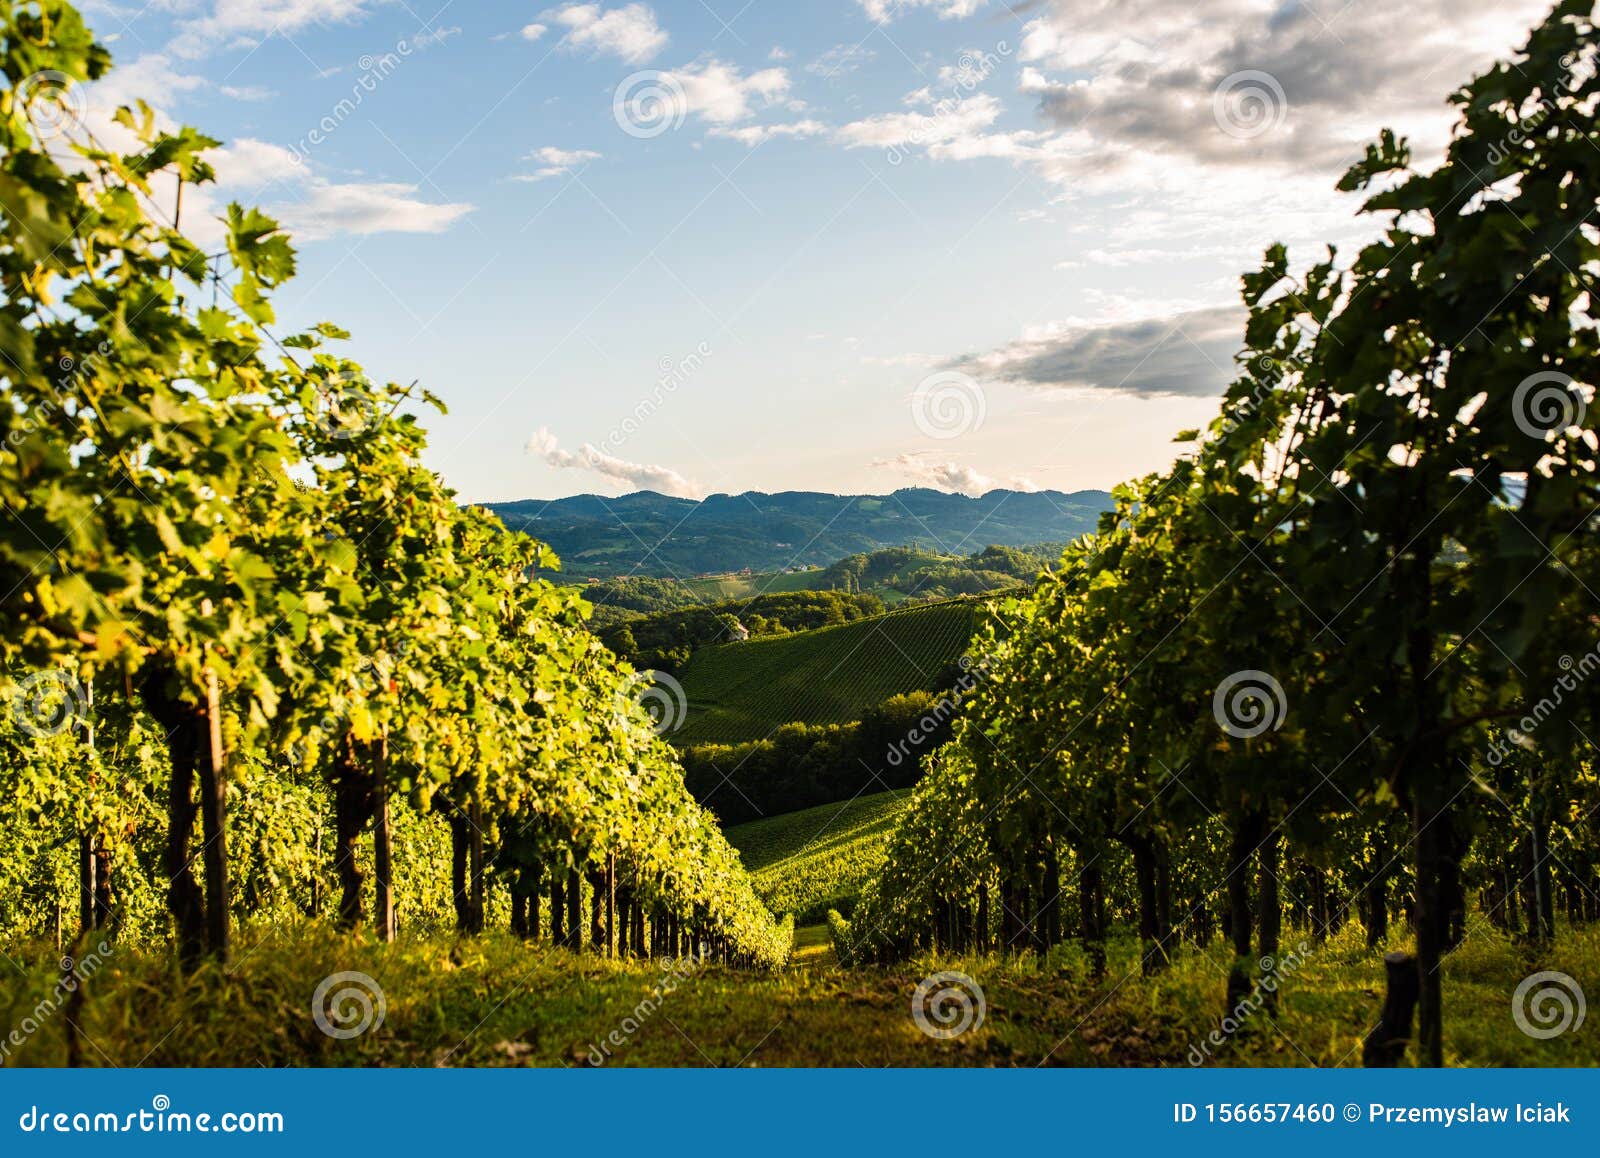 Austria, South Styria Vineyards Travel Tourist Spot for Vine Stock Photo - Image of hills, grape: 156657460